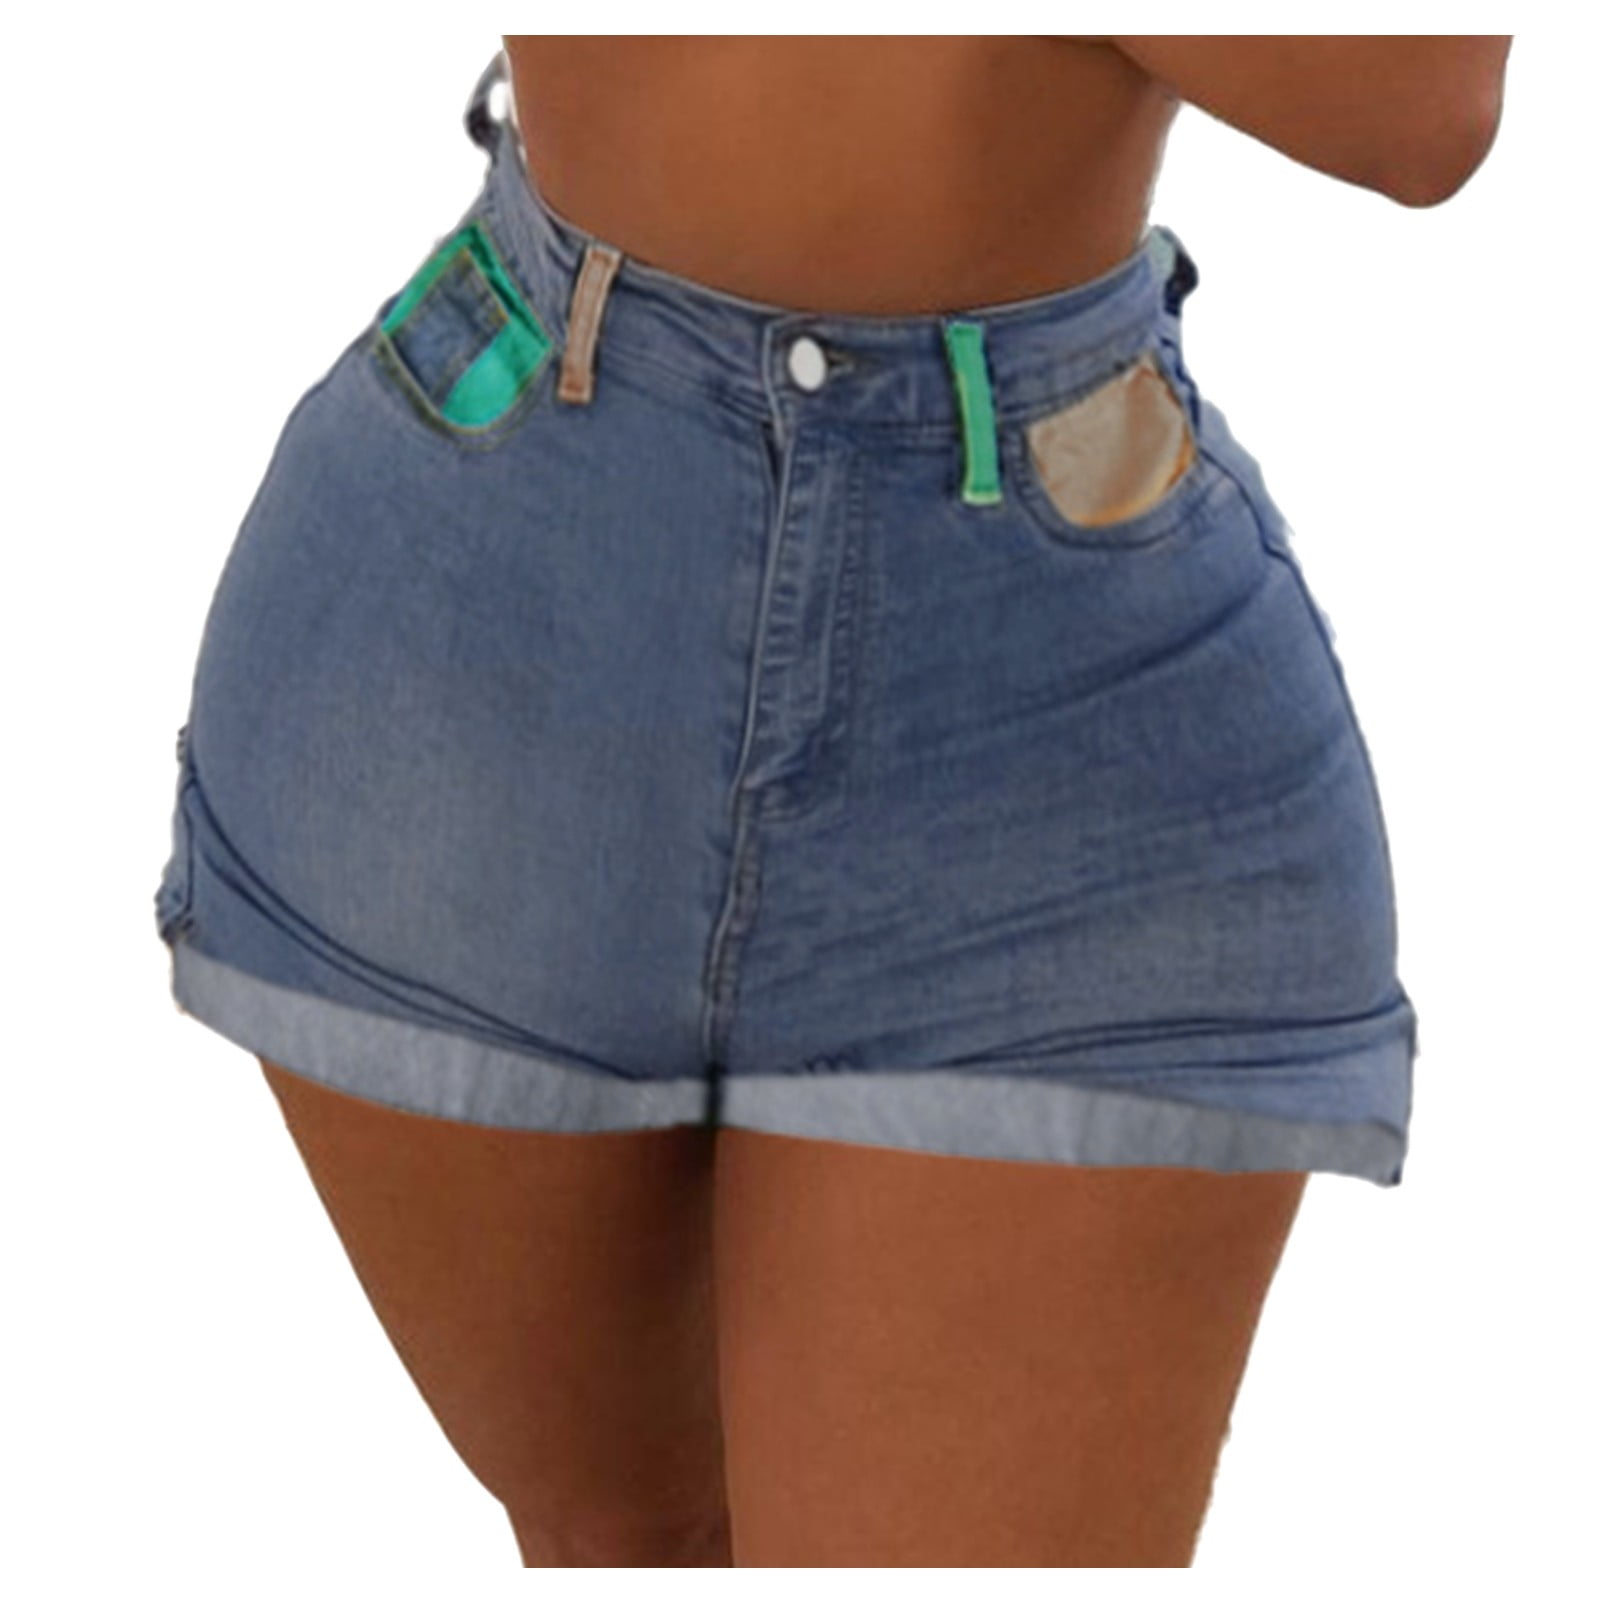 zuwimk Shorts For Women,Womens High Waist Microstretch Cotton Denim Shorts  Blue,M - Walmart.com